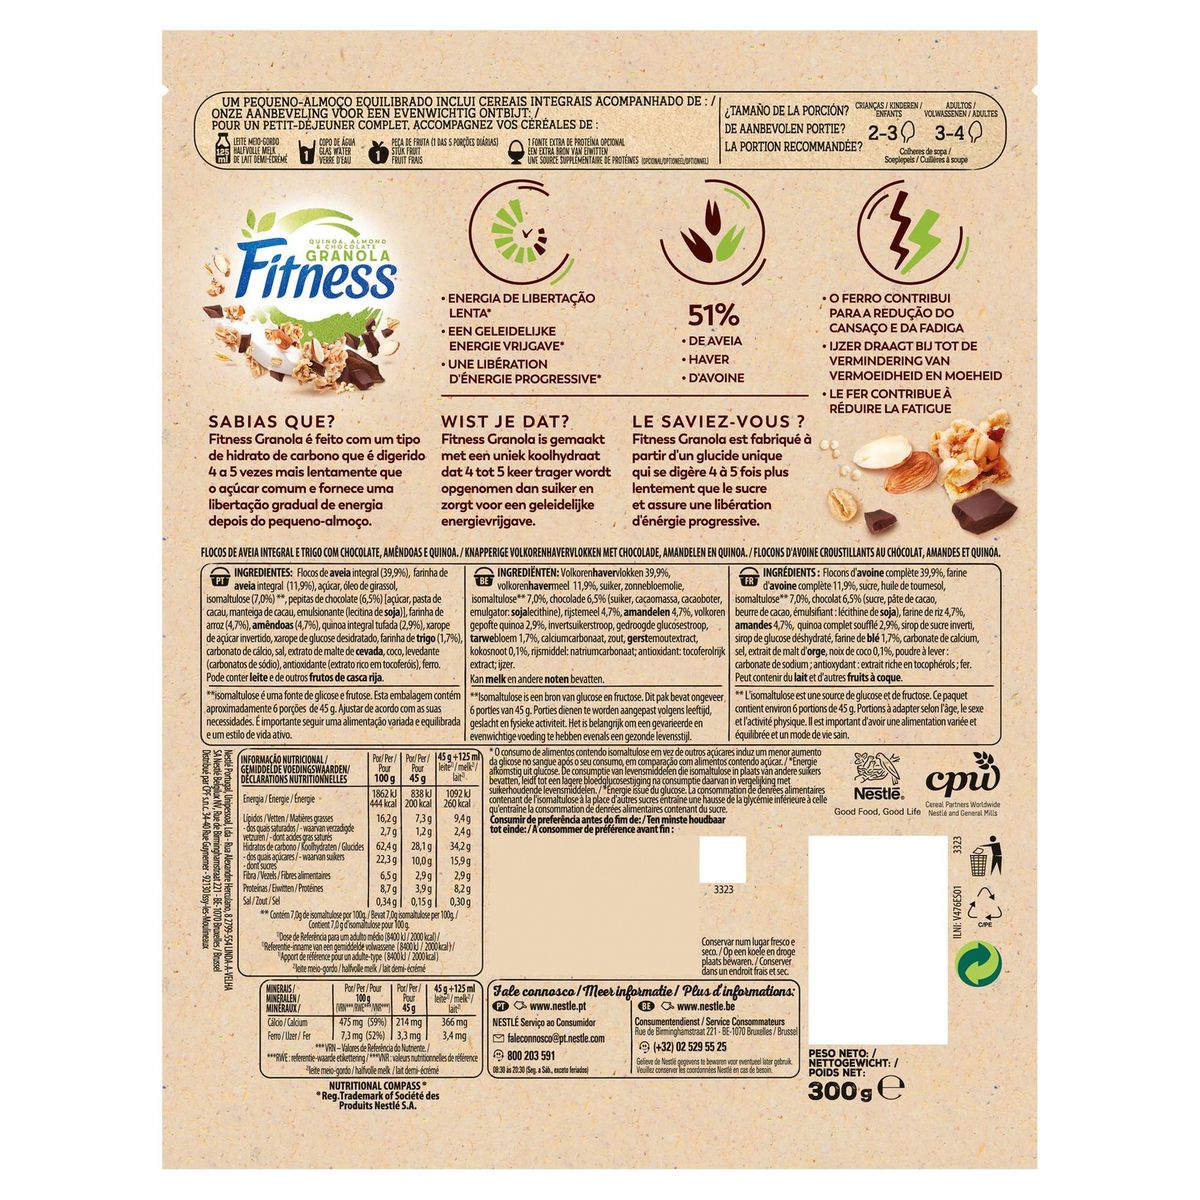 Fitness Ontbijtgranen Granola Quinoa & Chocolade 300g